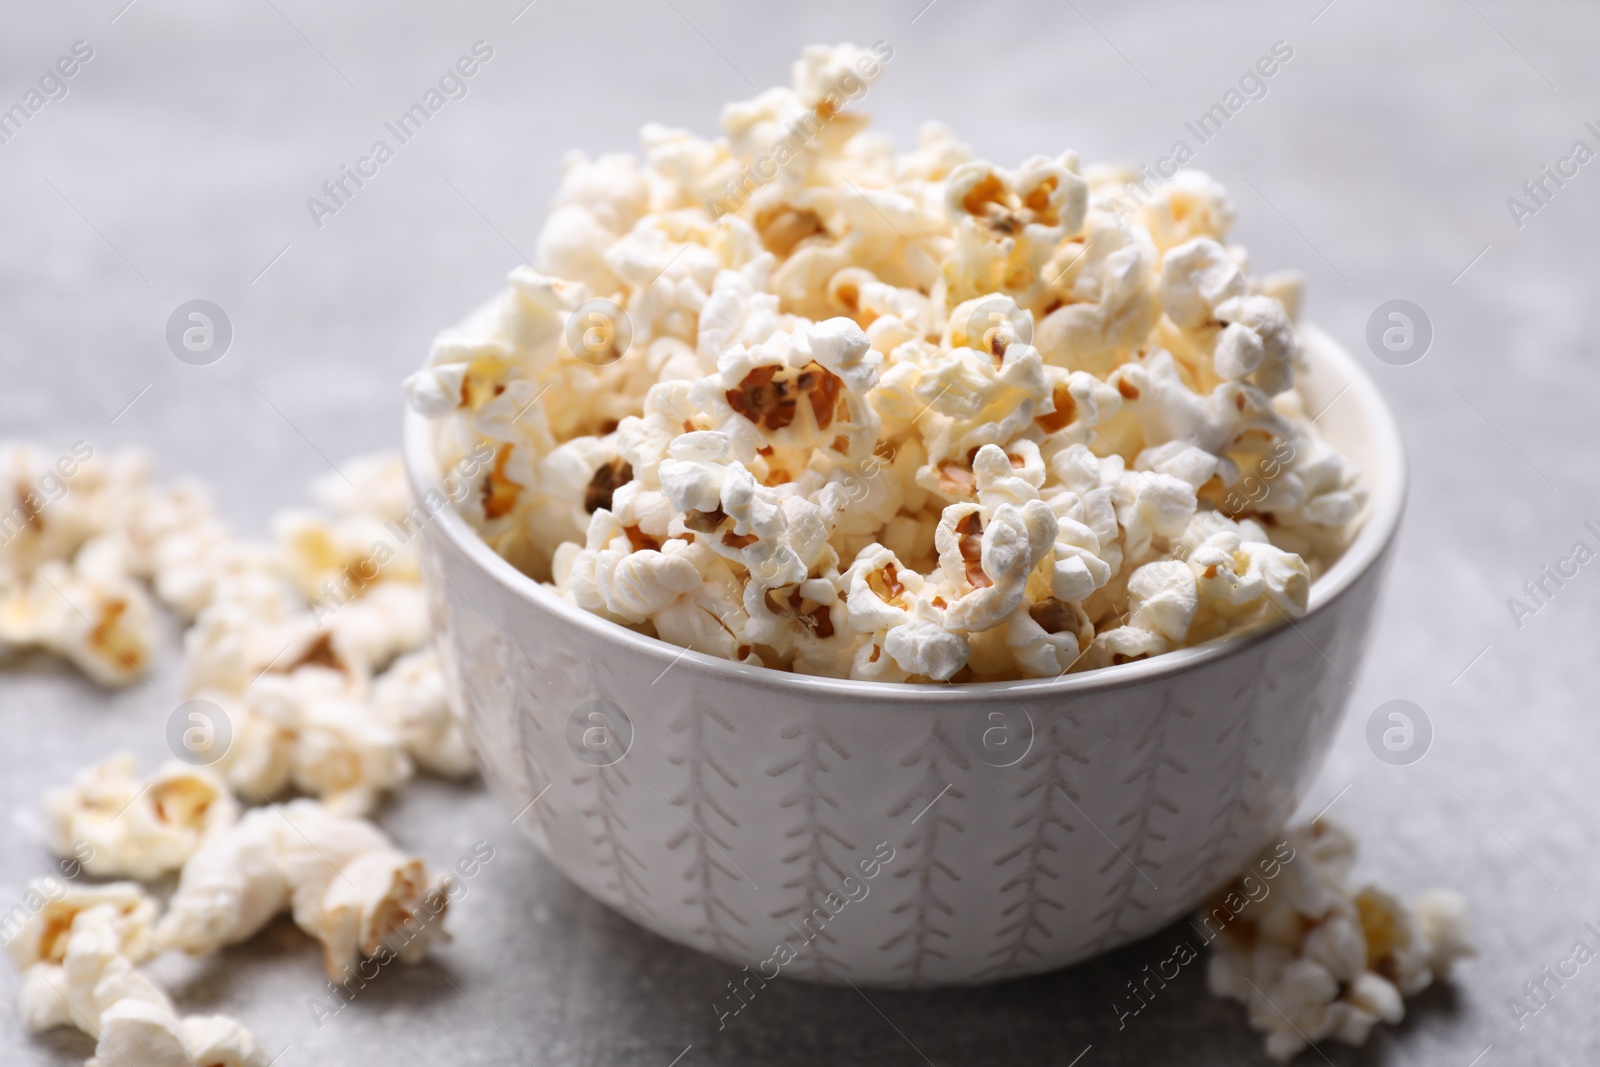 Photo of Bowl of tasty popcorn on grey table, closeup